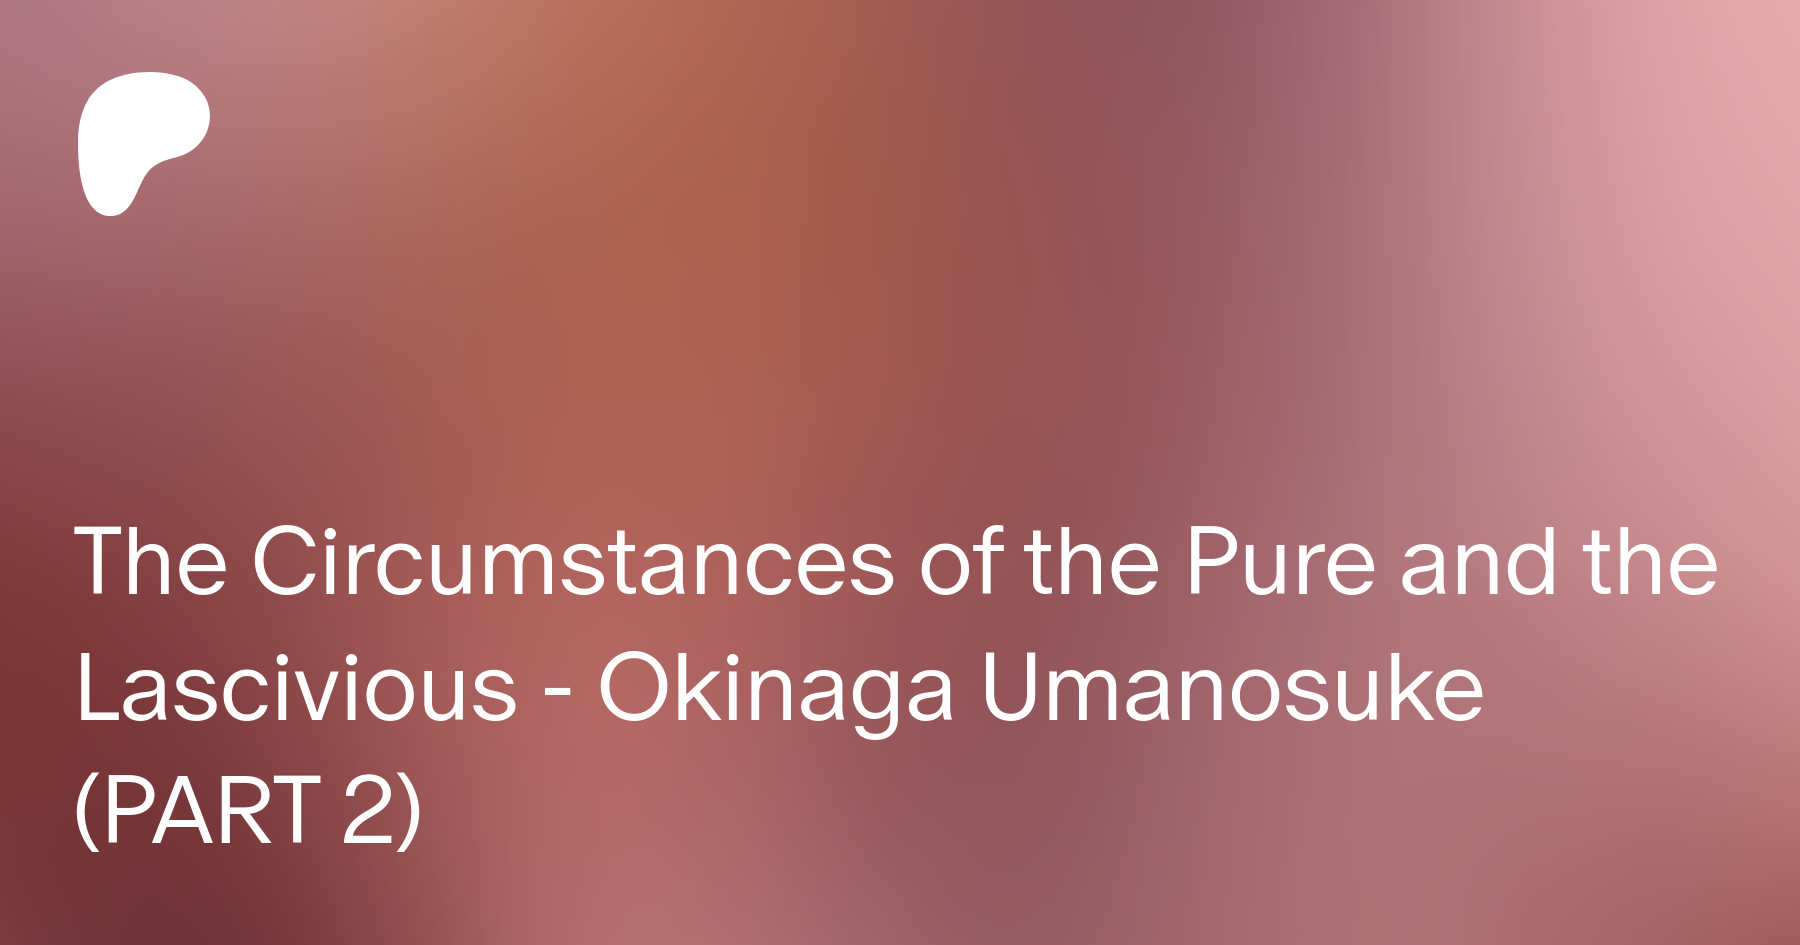 The circumstances of the pure and the lascivious [okinaga umanosuke]